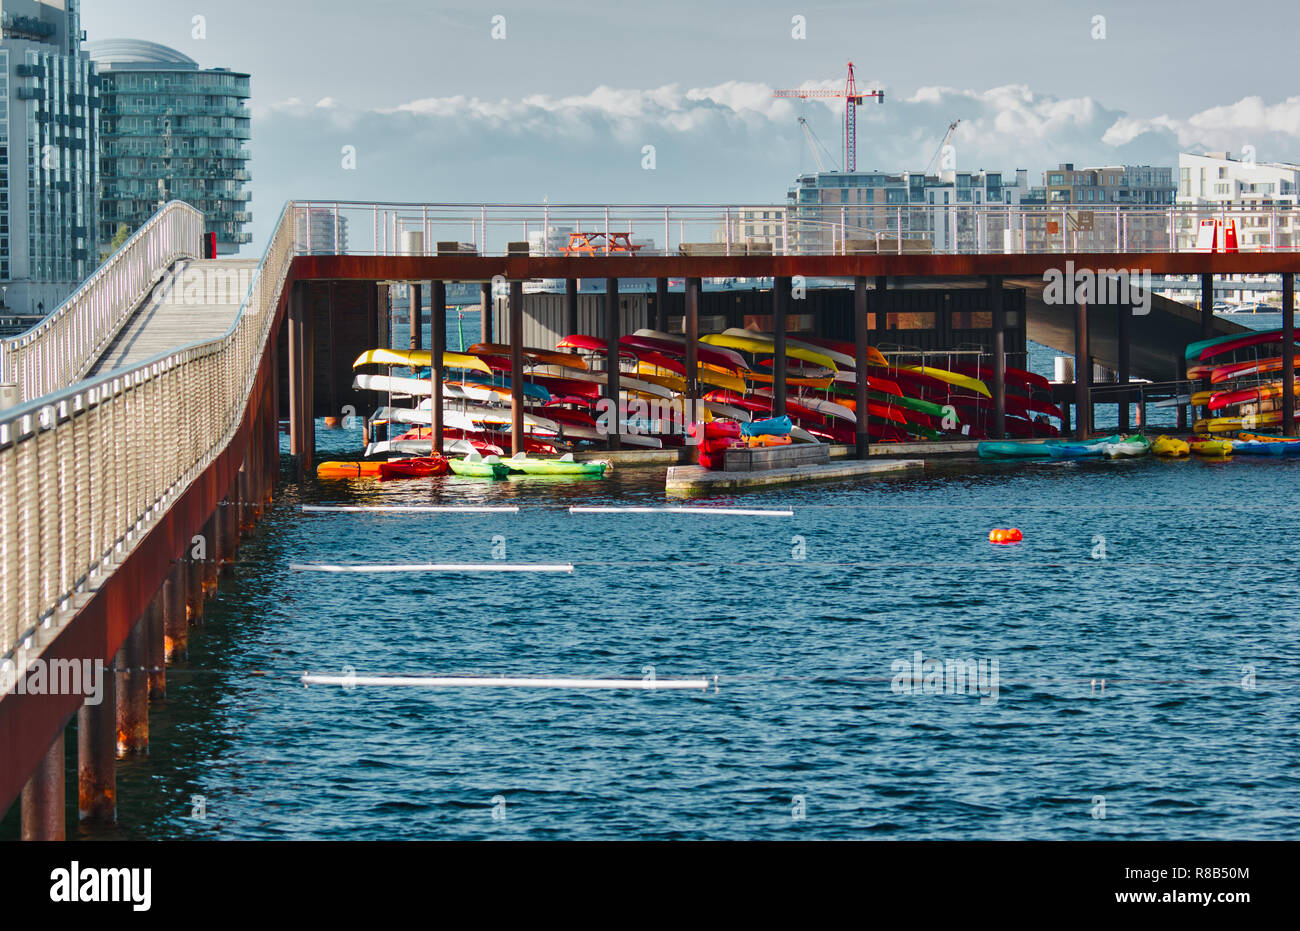 Kayaks, Kalvebod Brygge (Kalvebod Quay), Vesterbro, Copenhagen, Denmark, Scandinavia Stock Photo